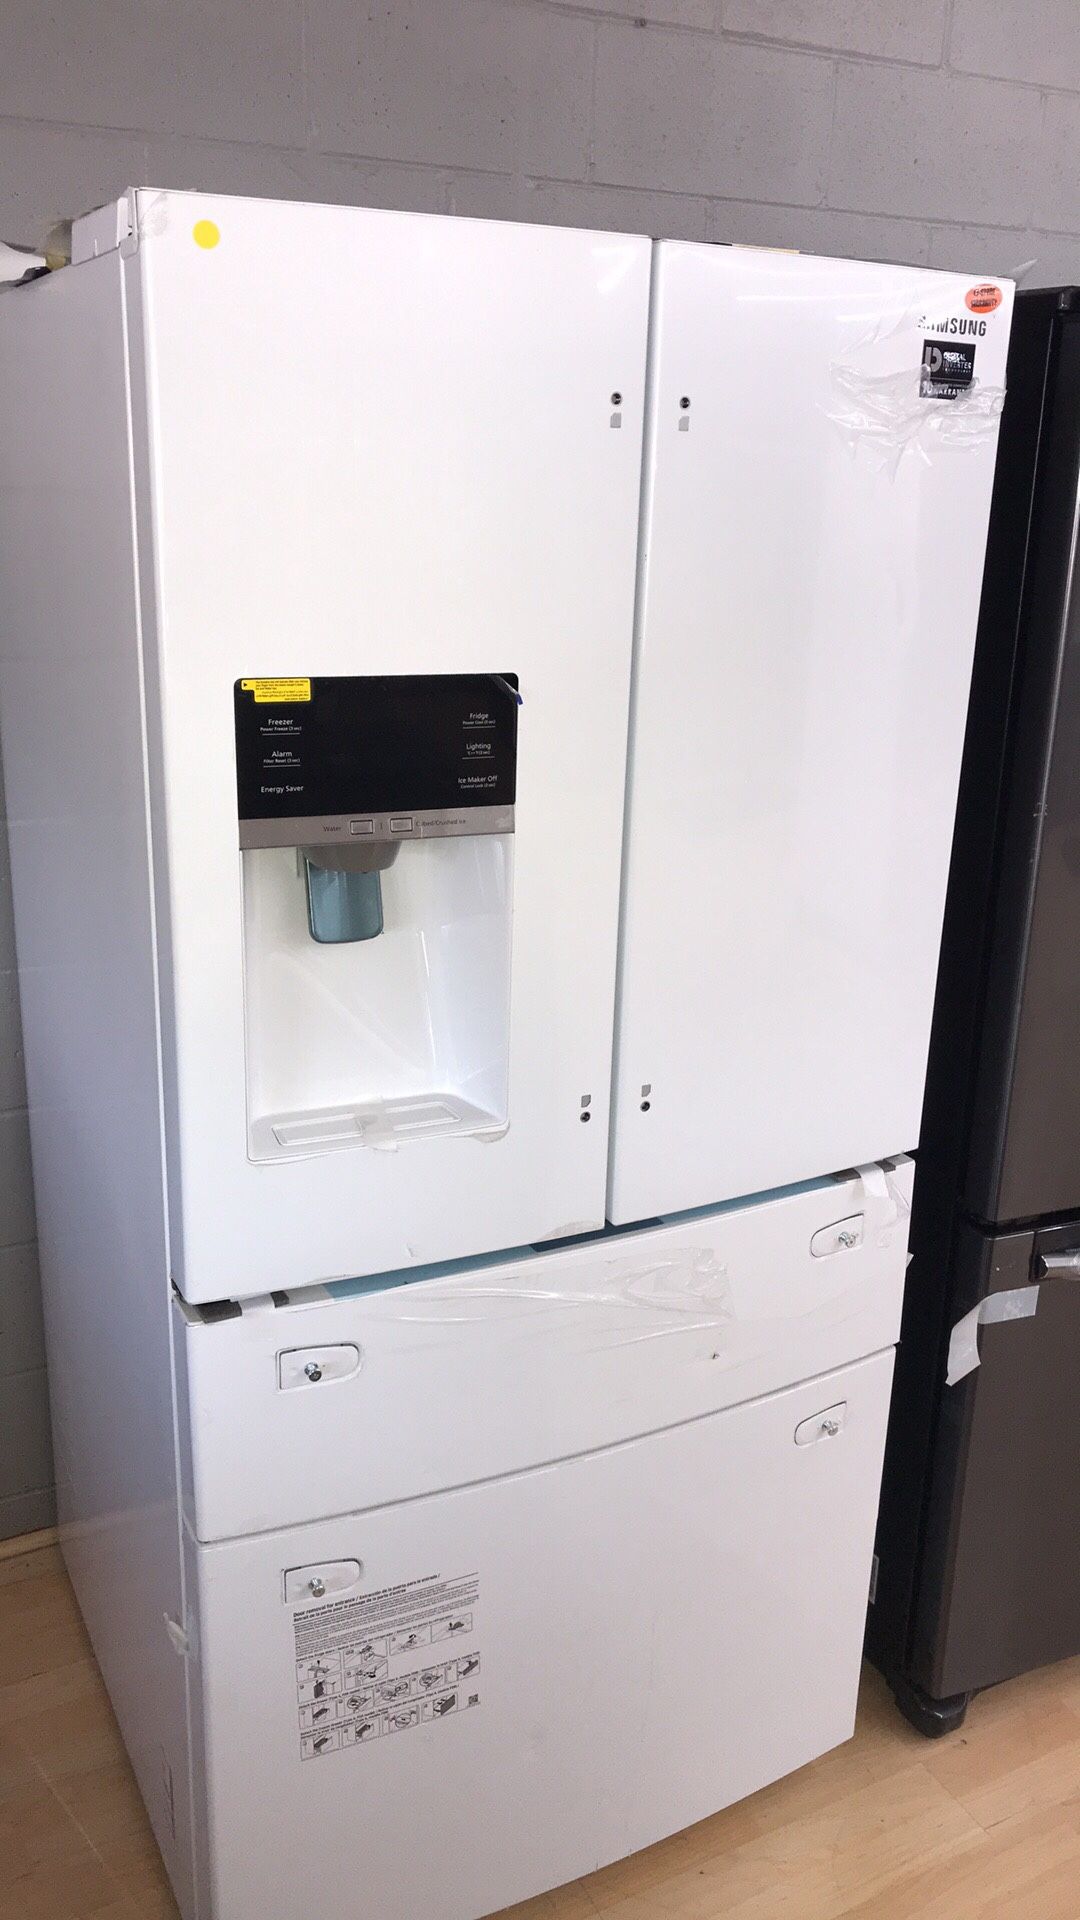 Brand new 33’ white 4 door refrigerator with water dispenser